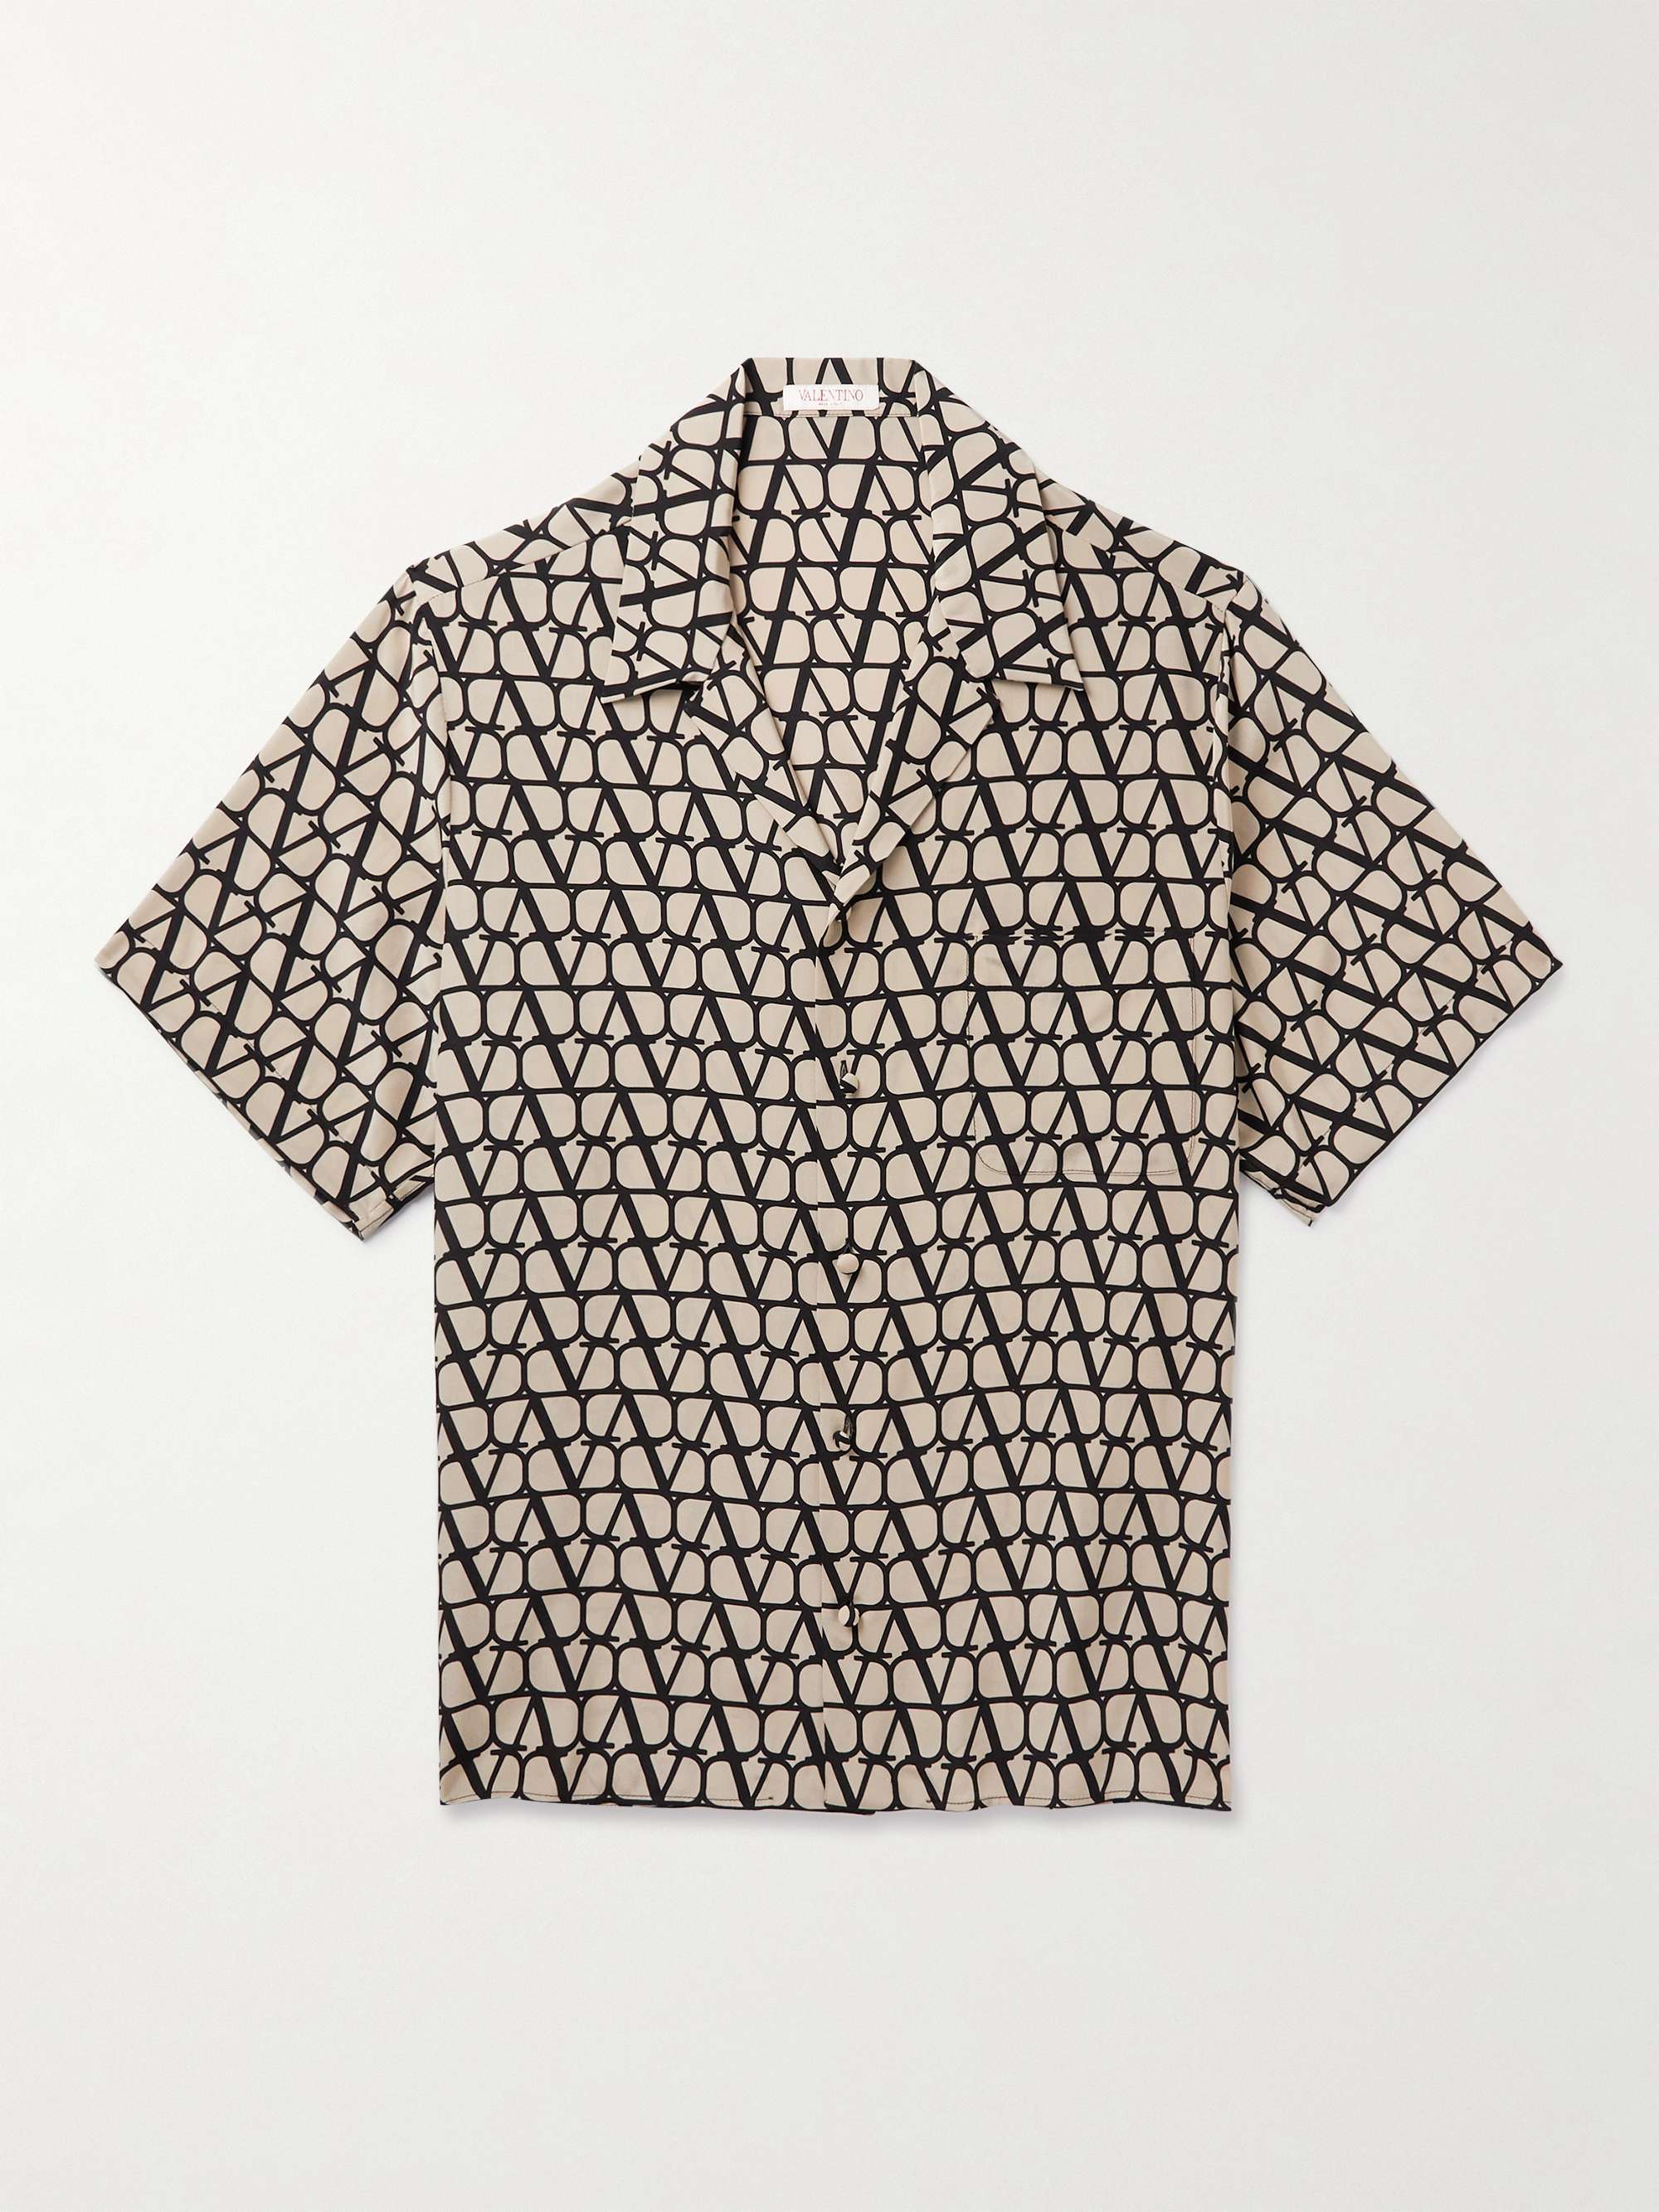 Valentino Silk Bowling Shirt in Pineapple Print Man Pink/White 50